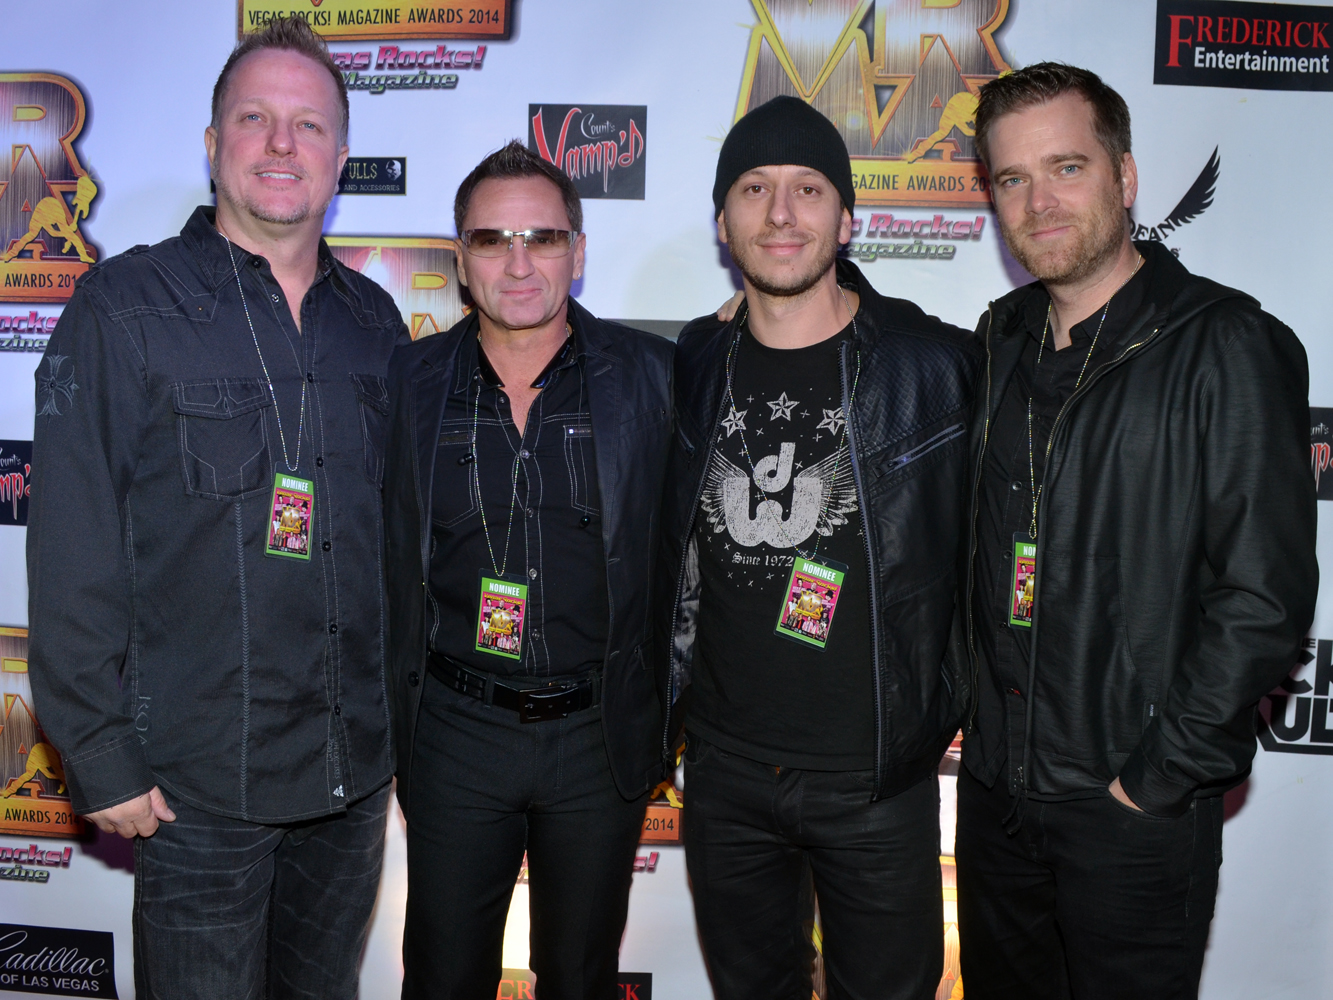 Arms of America - Vegas Rocks Magazine Music Awards 2014 photo credit Stephen Thorburn 63691